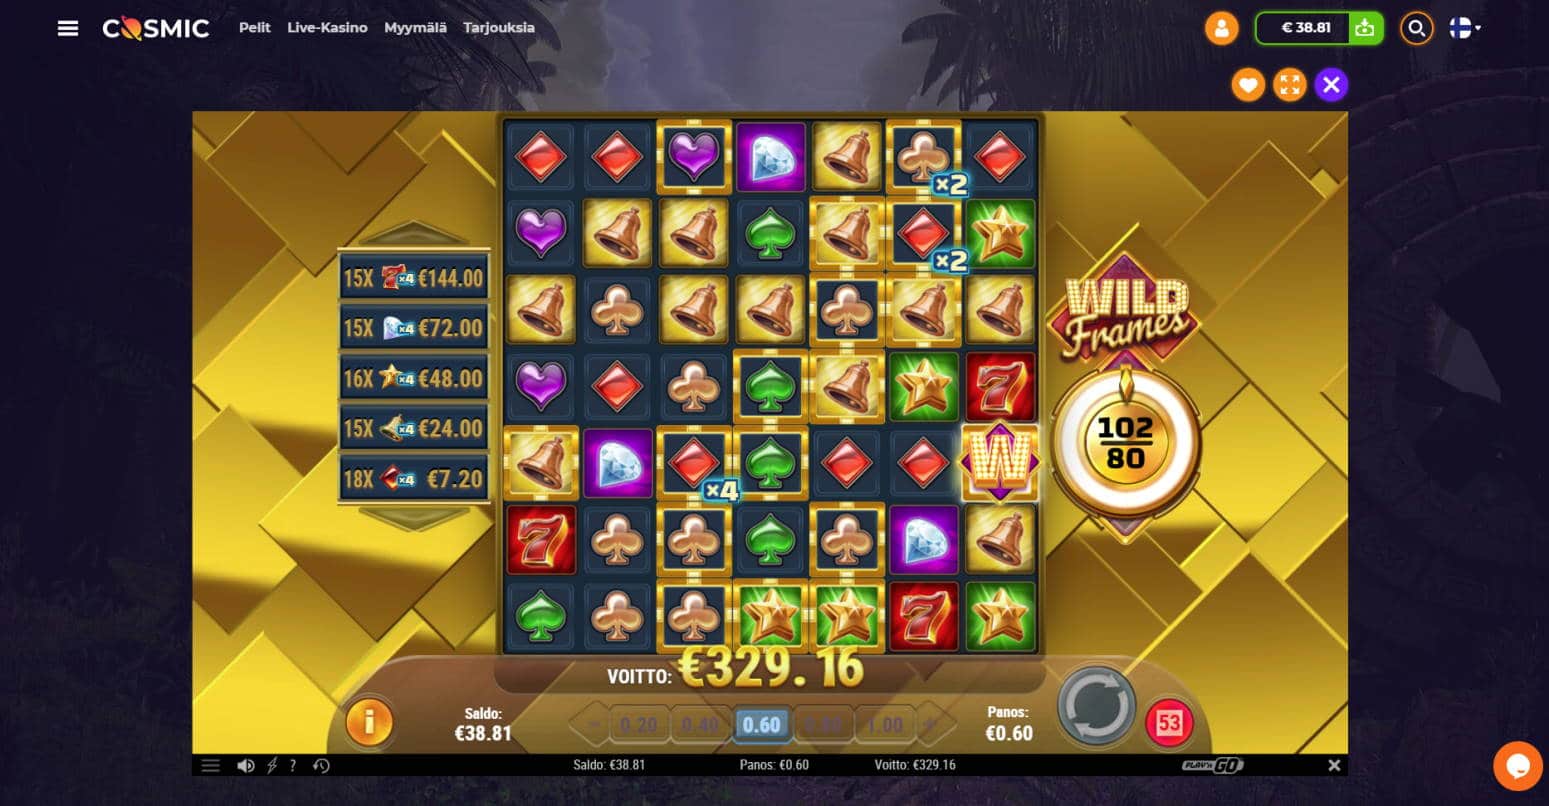 Wild Frames Casino win picture by Banhamm 7.7.2021 329.16e 549X Cosmic